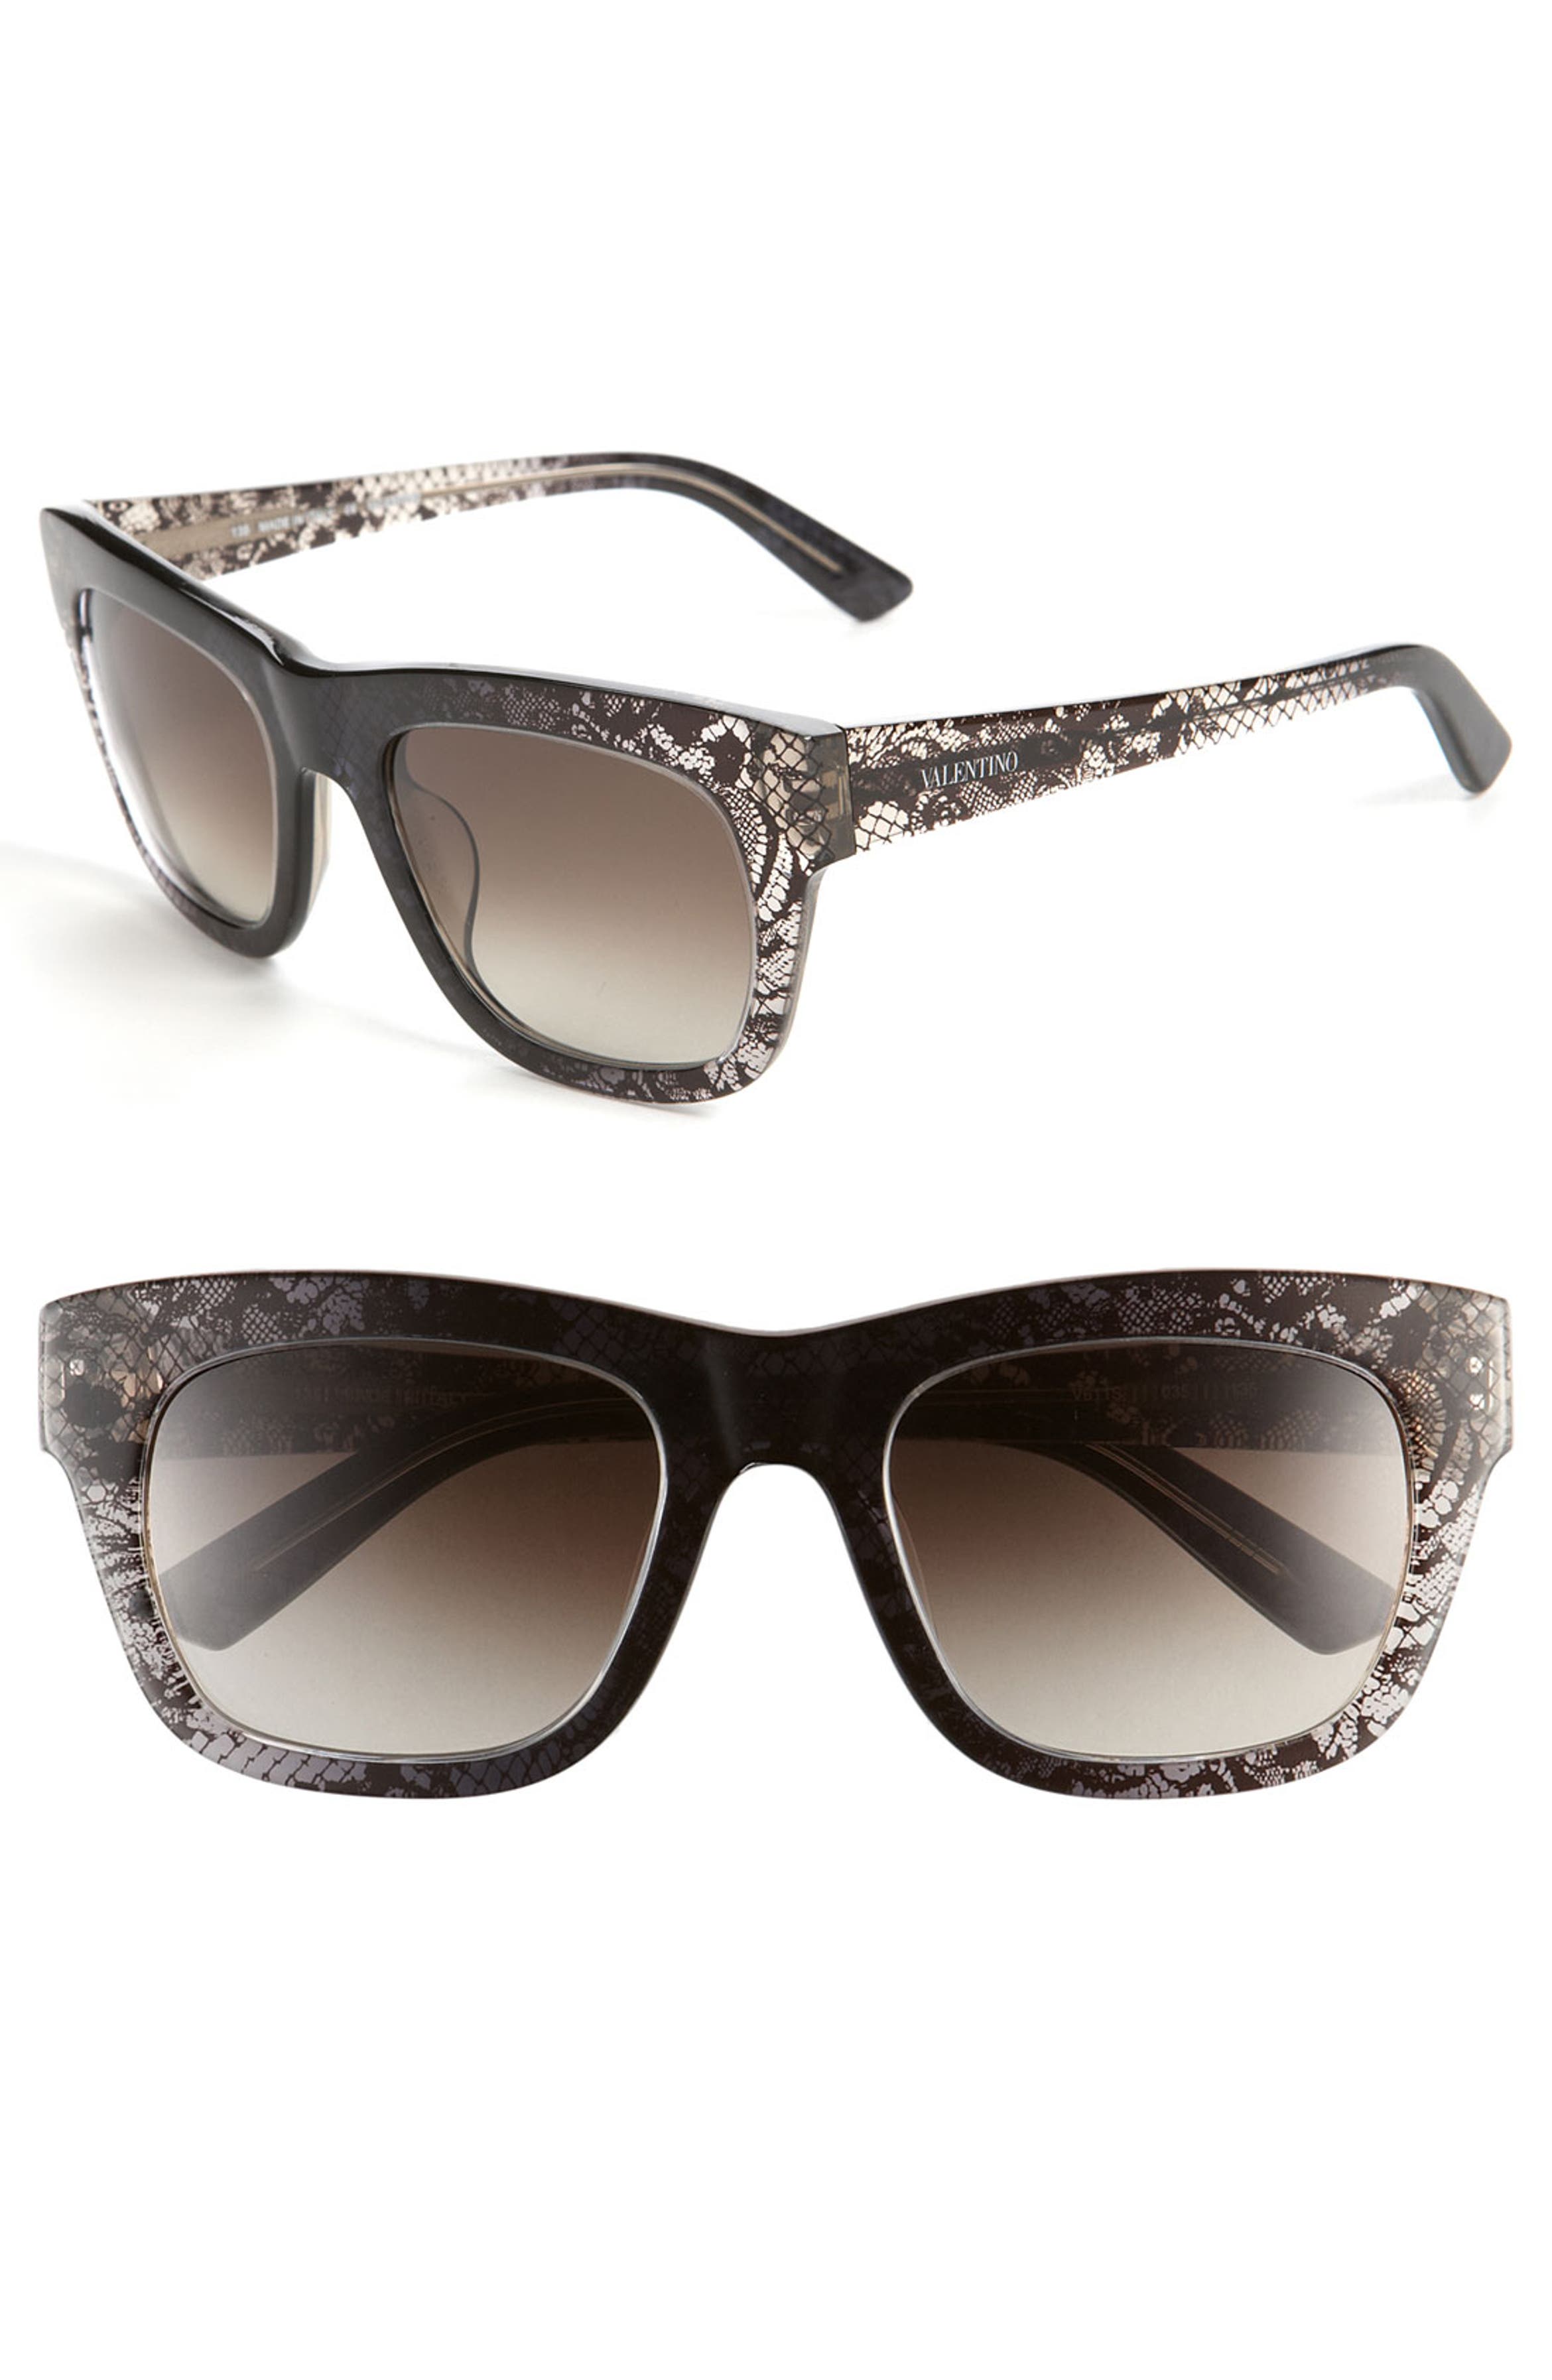 Valentino Sunglasses | Nordstrom